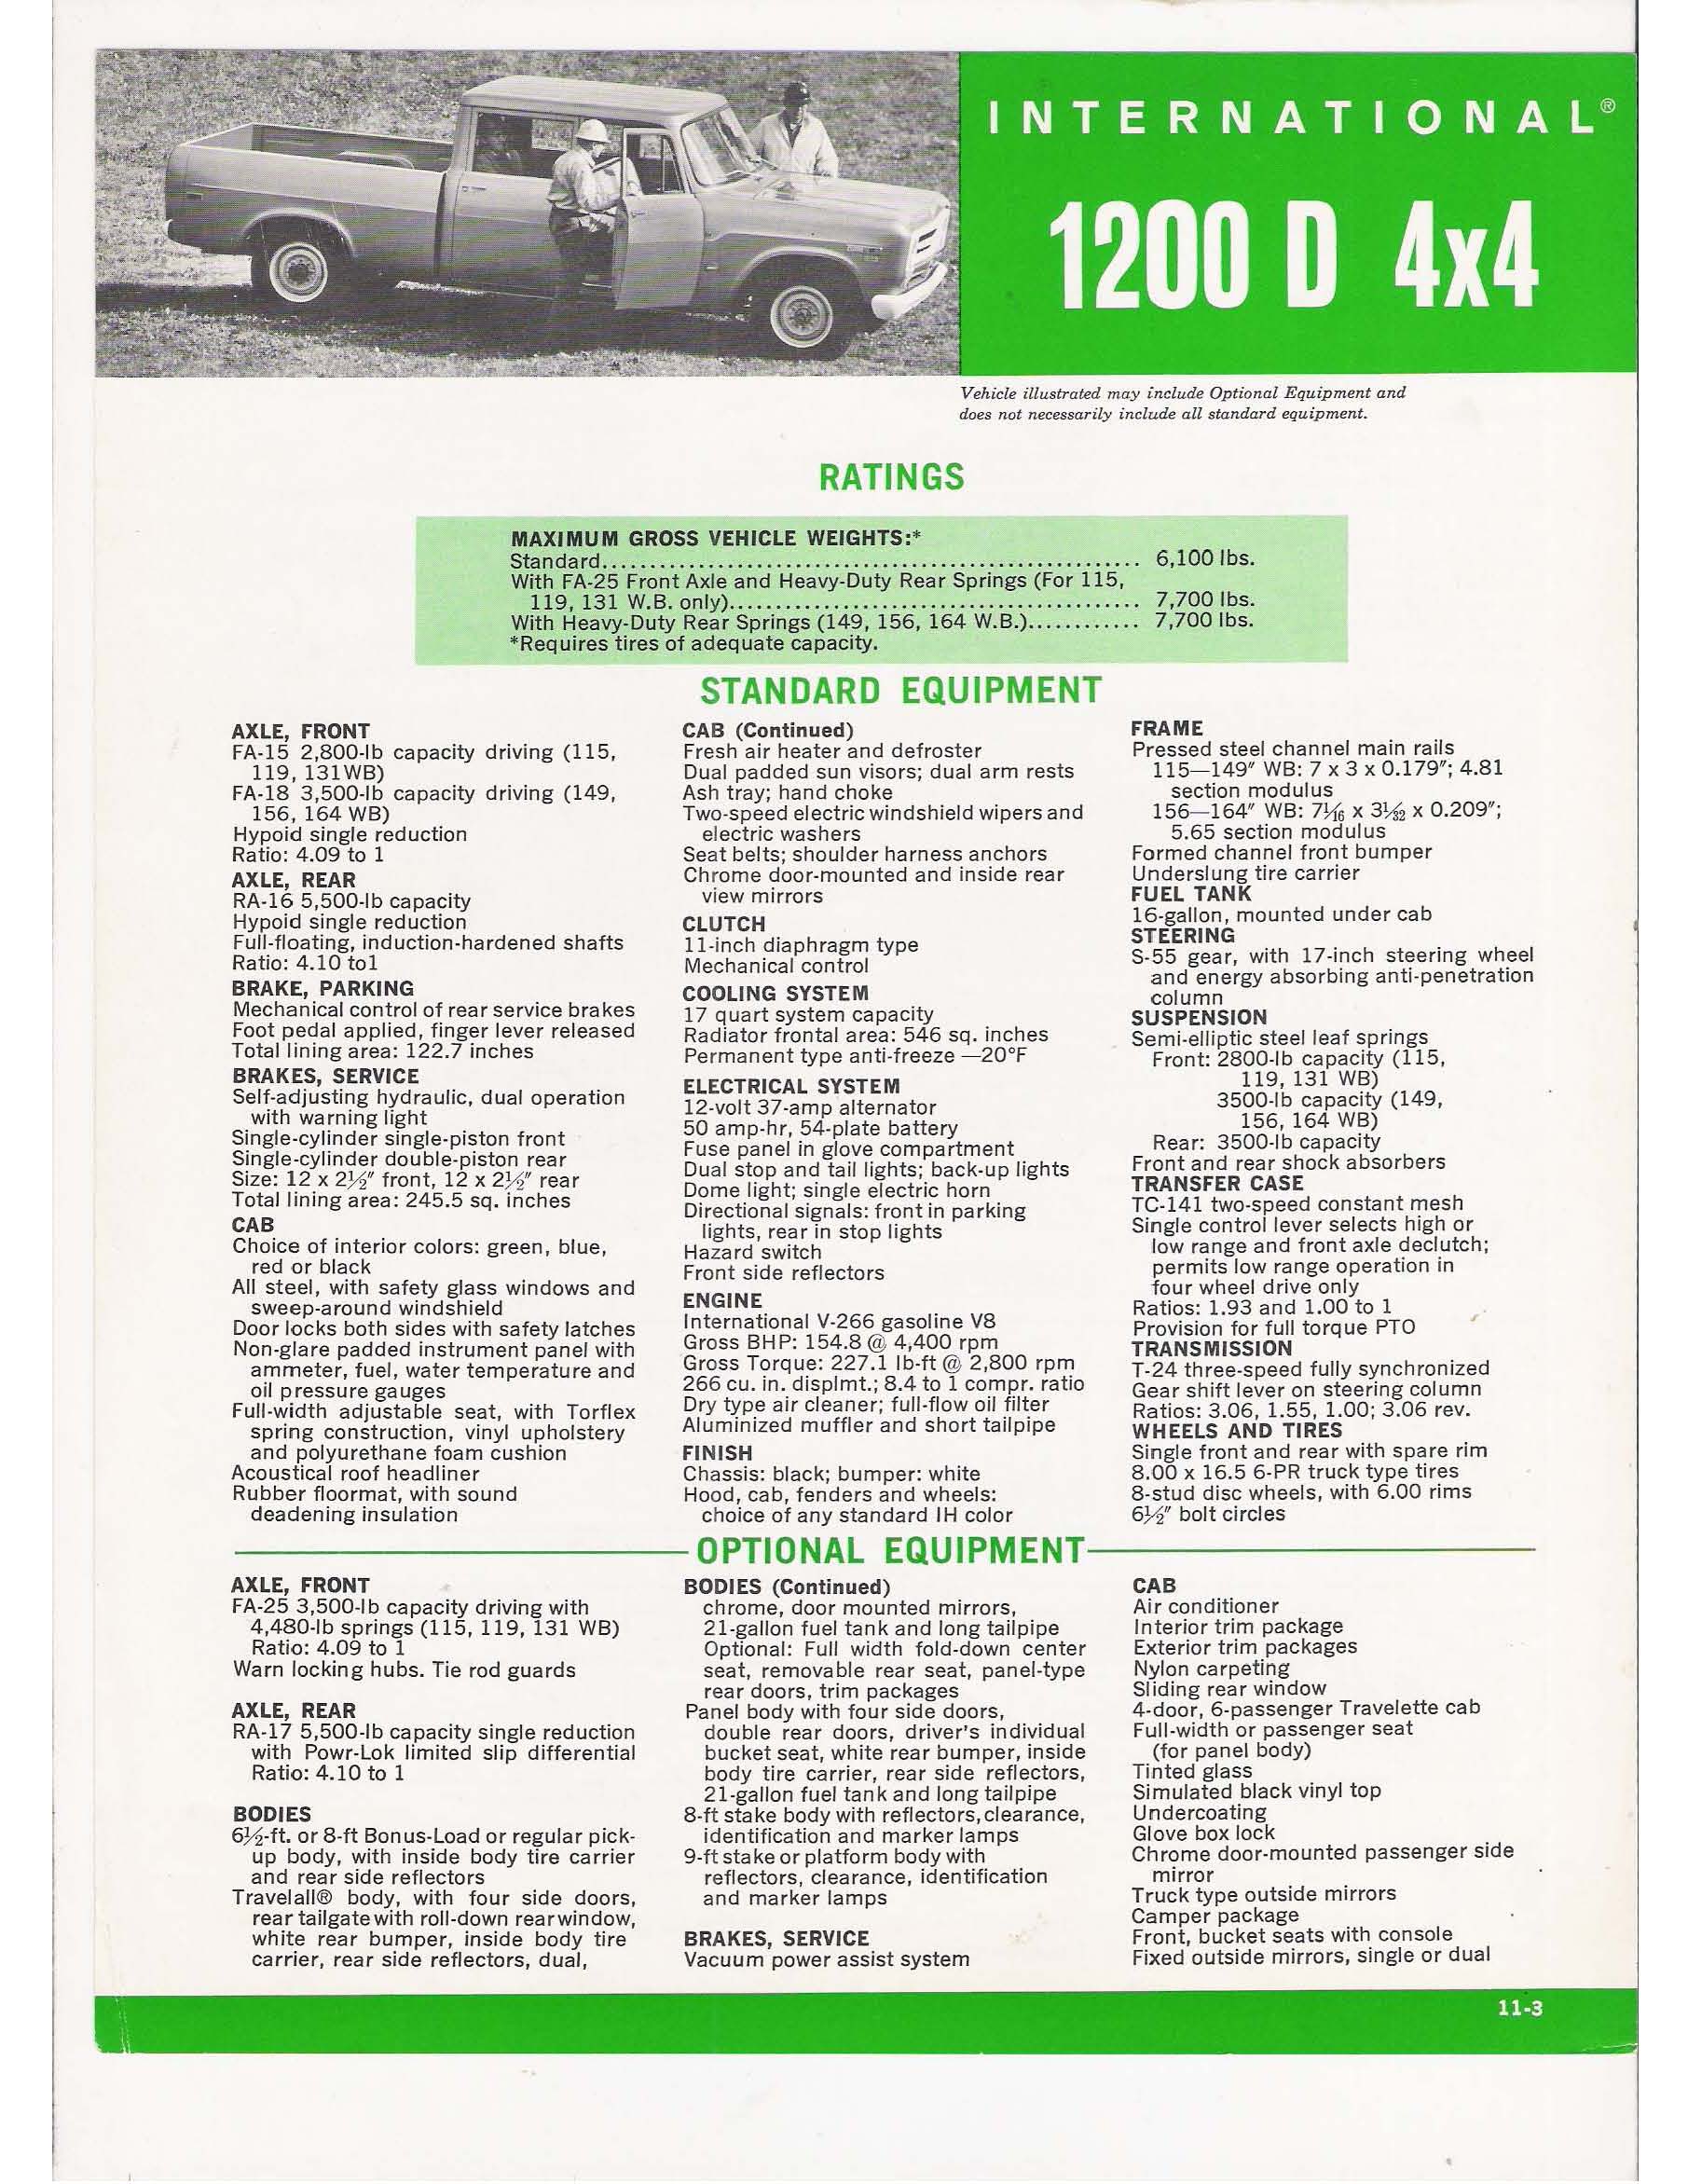 1969 International 1200D 4X4 Folder Page 1